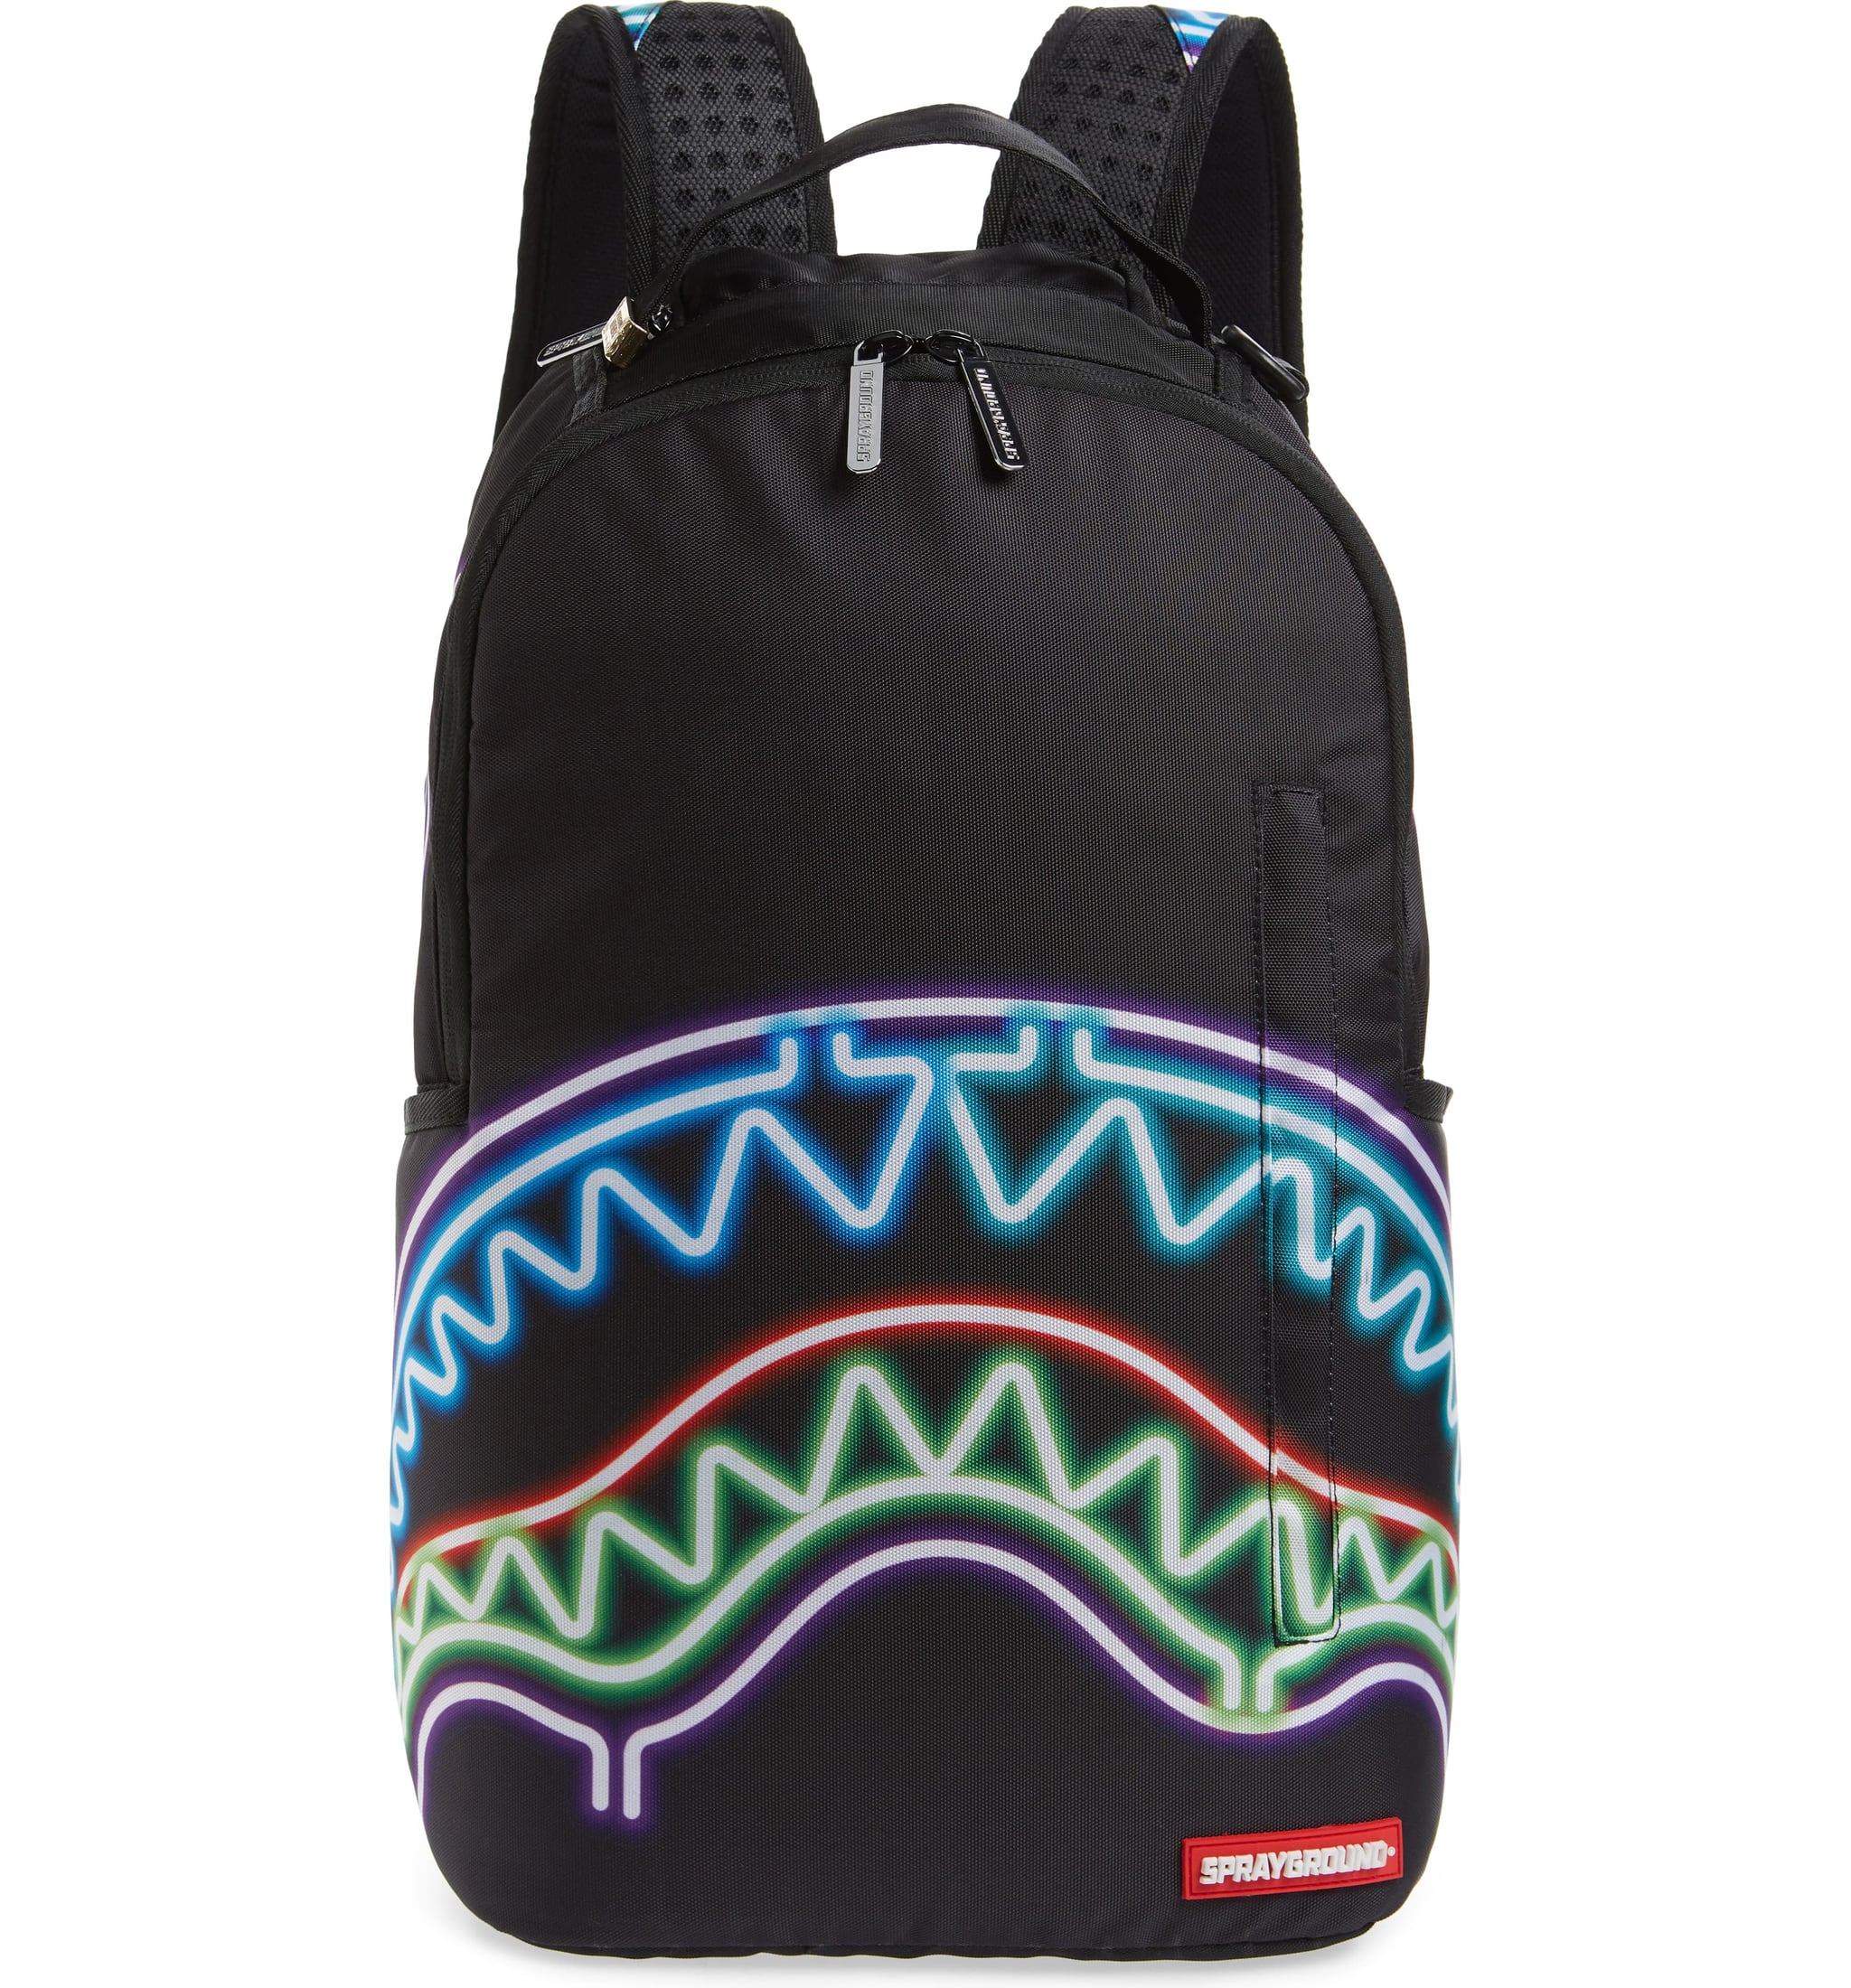 Shark Backpack 15" School Bag NEW 